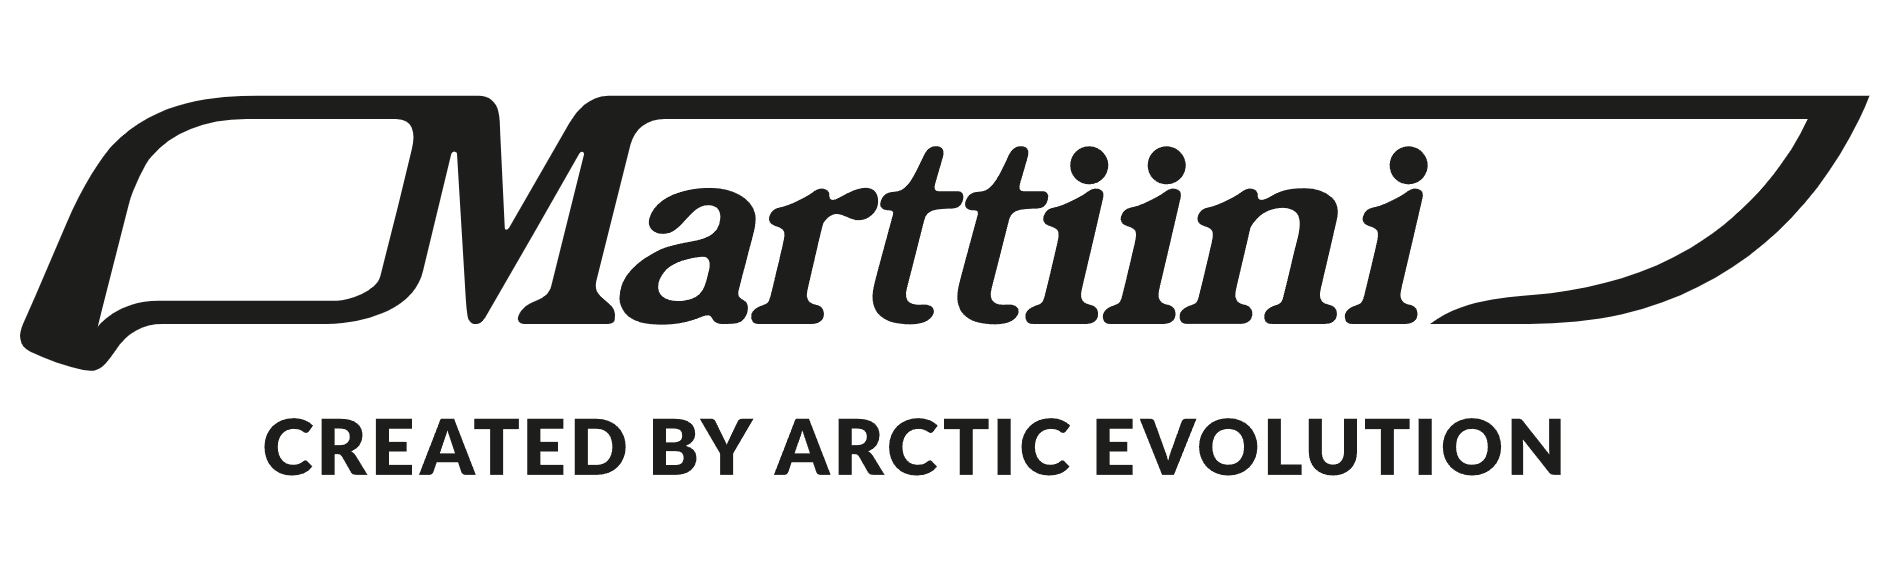 Marttiini_Logo_02